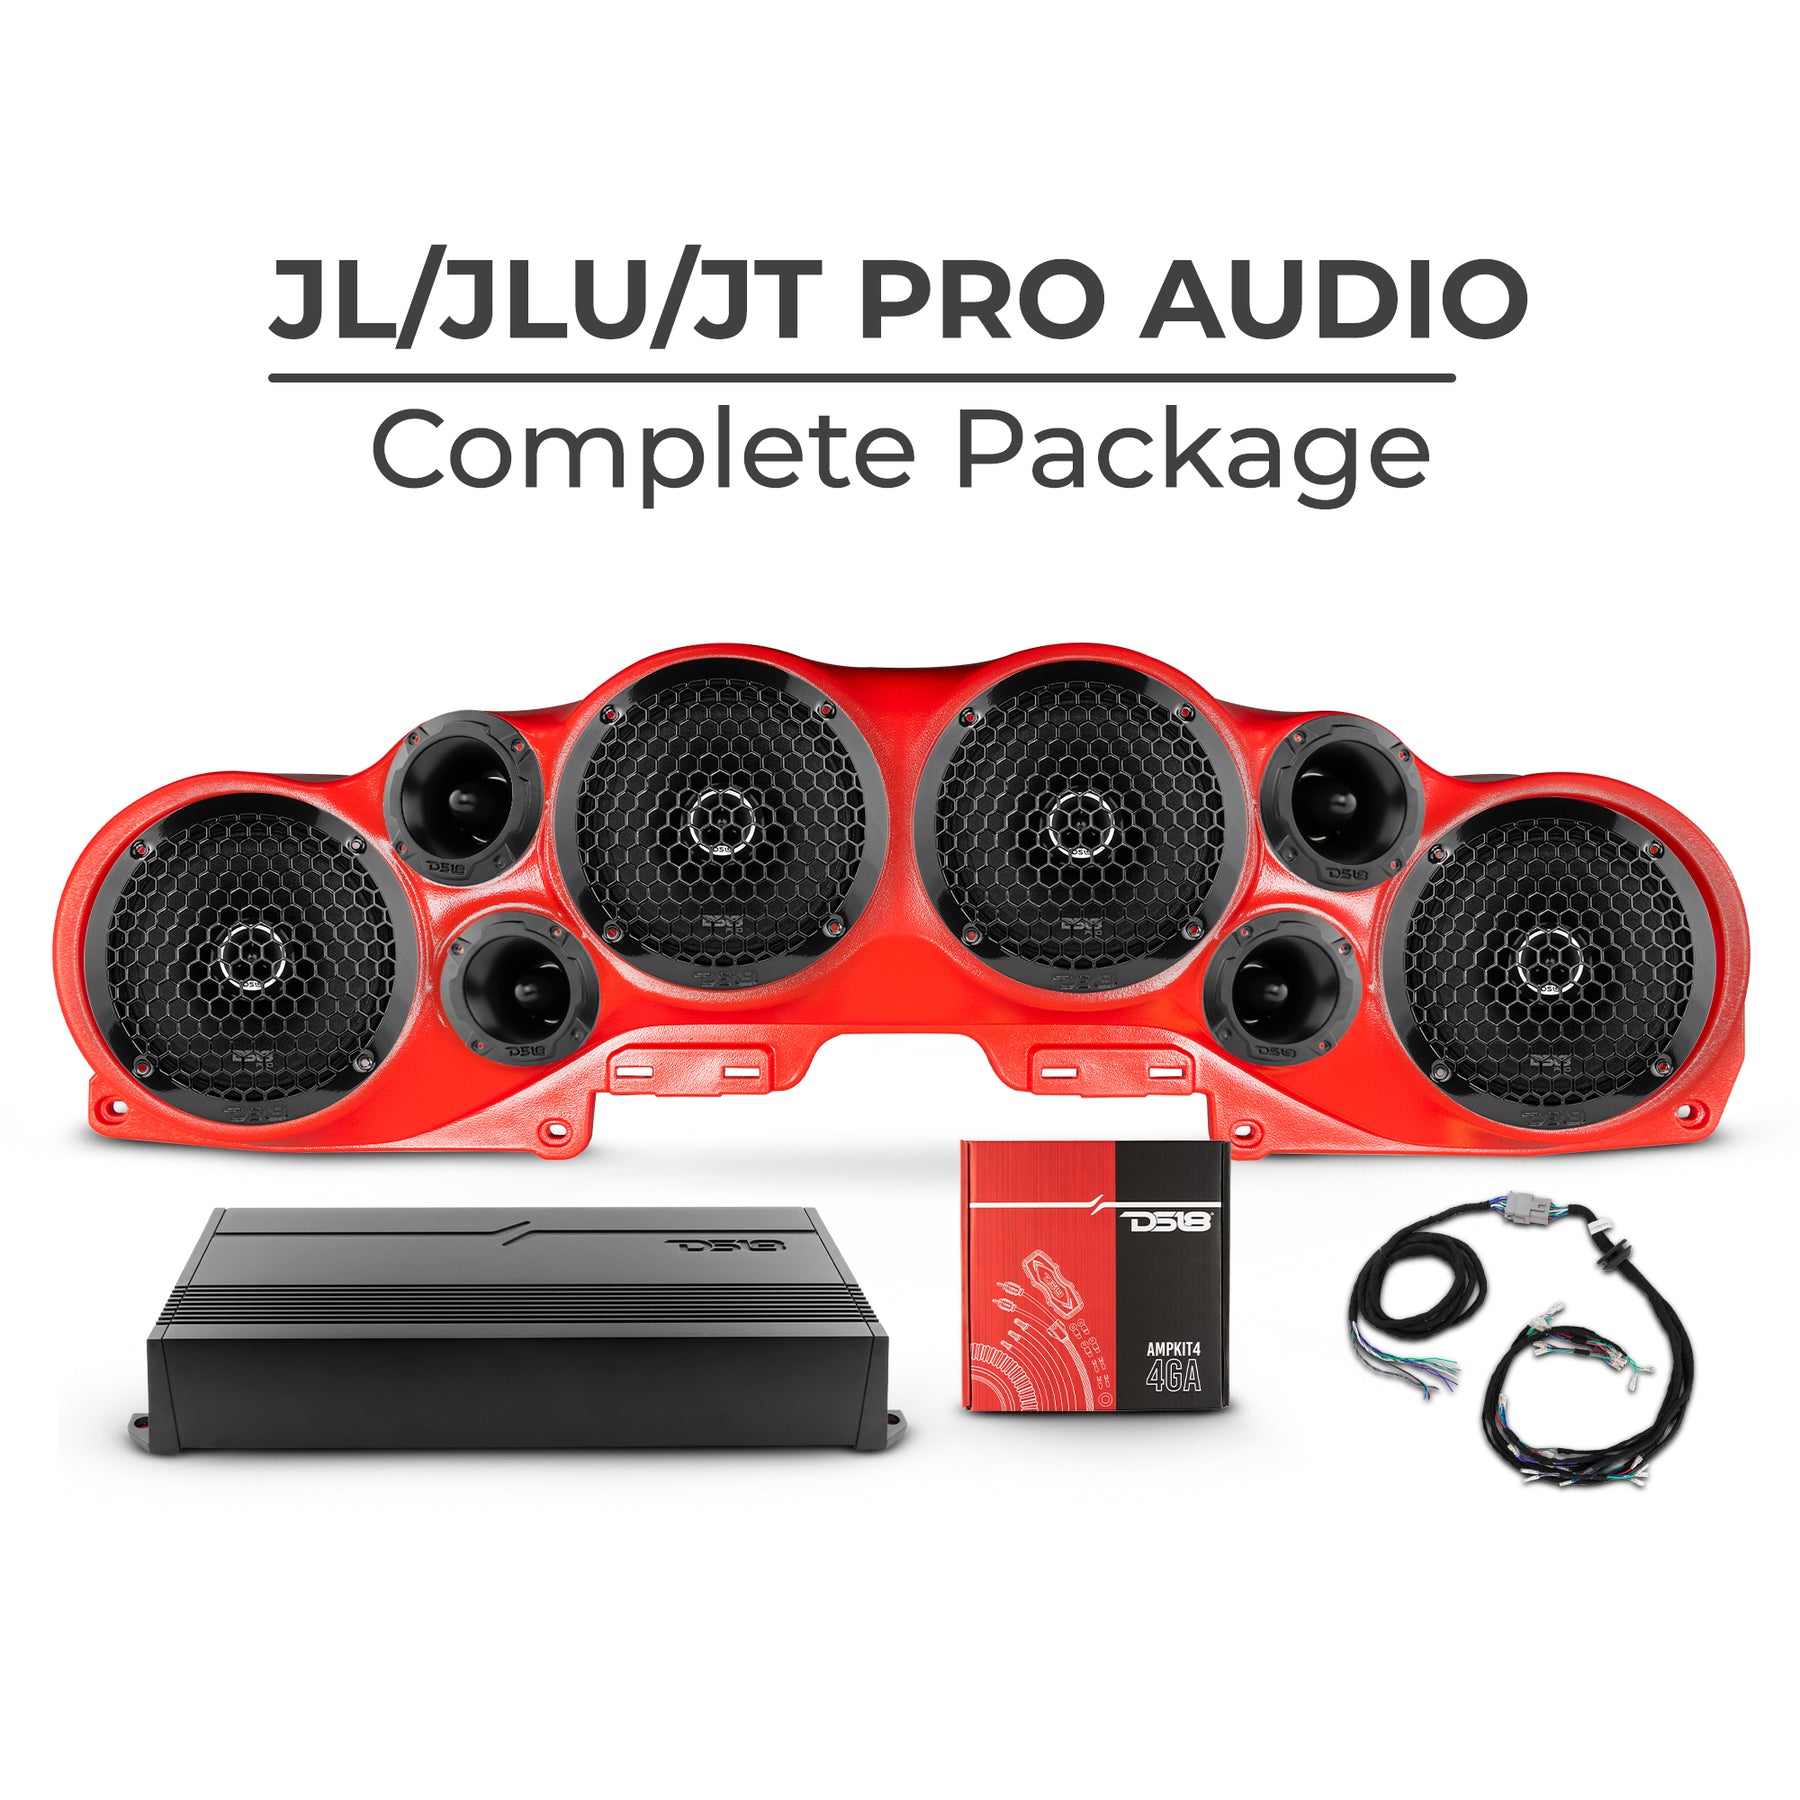 DS18 Jeep JL/JLU/JT Pro Audio Complete Sound Bar Package